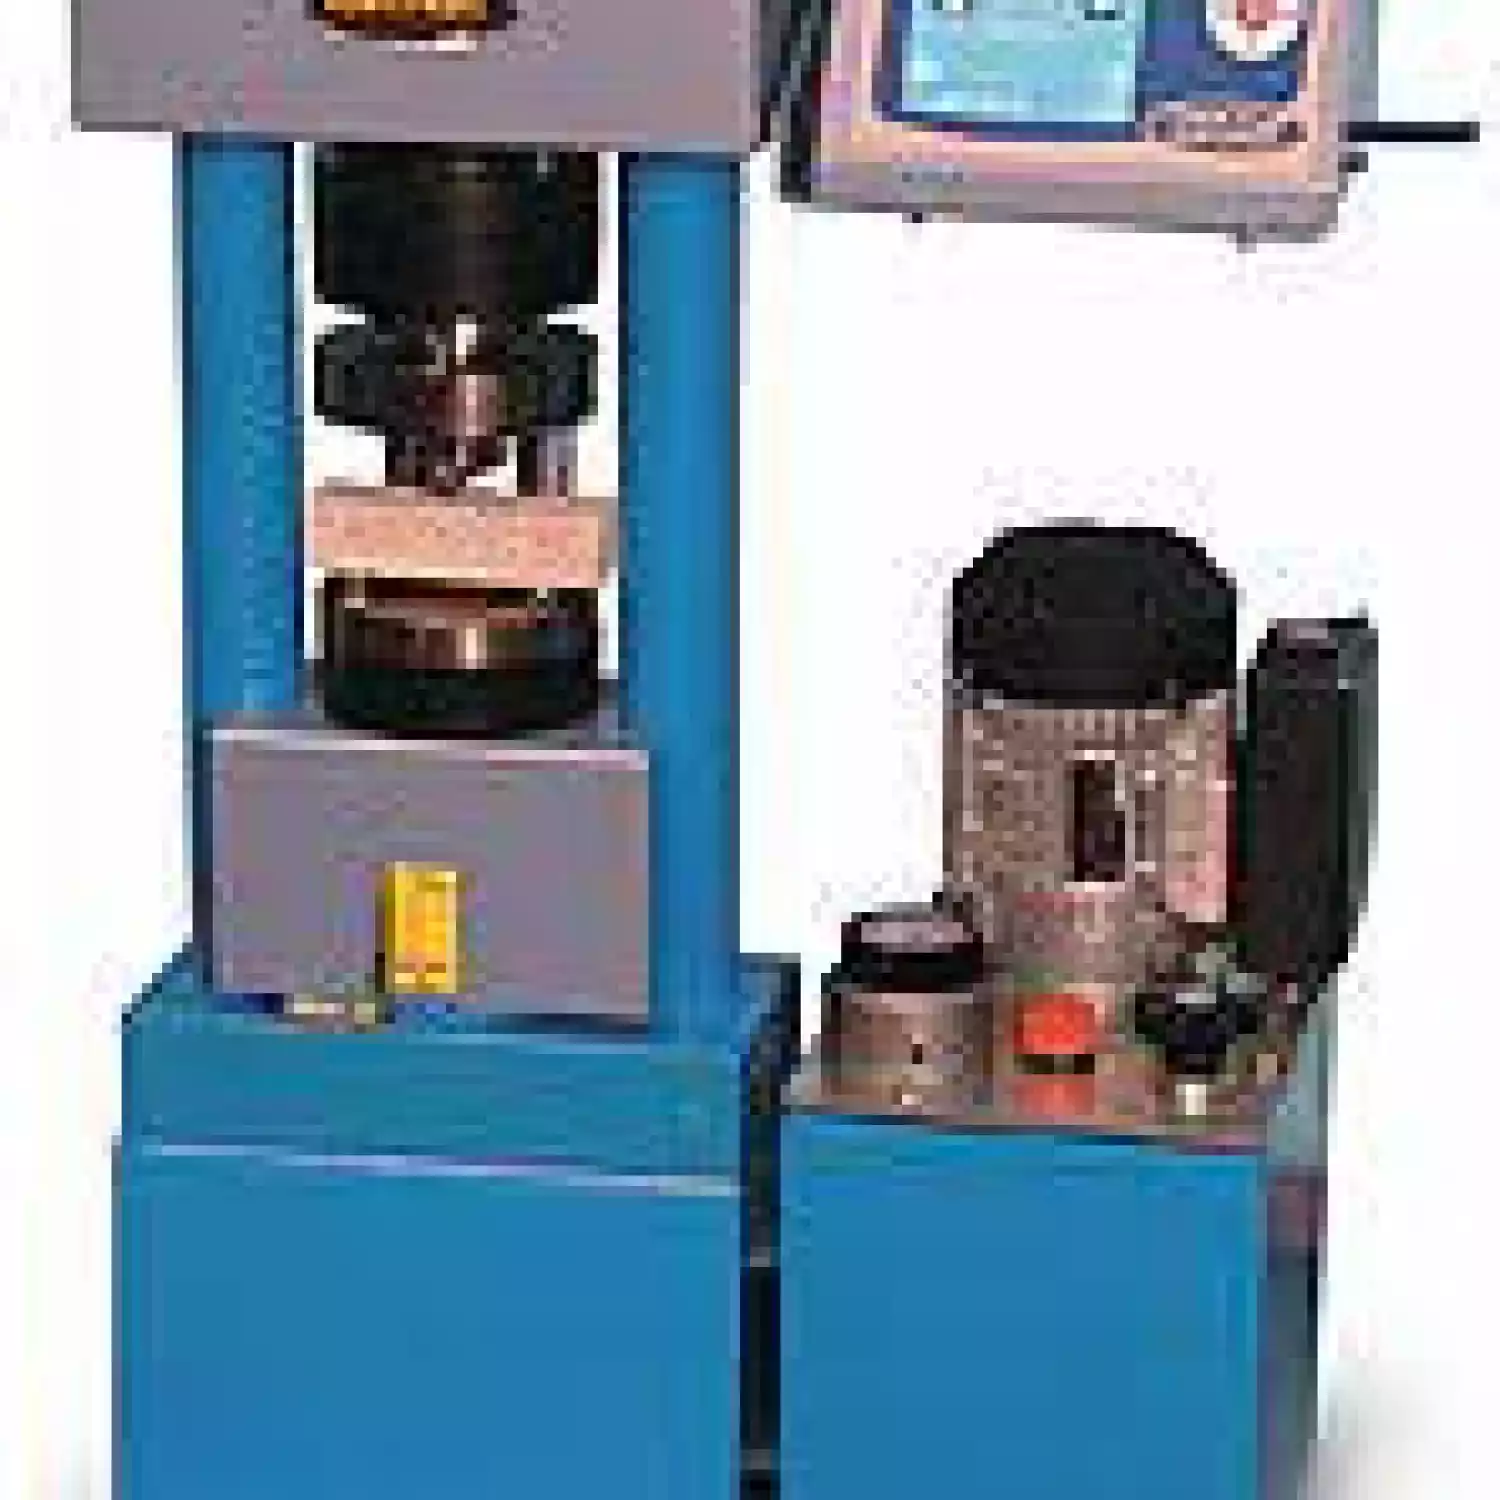 Машина для испытаний цемента на сжатие и изгиб E160-01N (250/15 кН) - 1